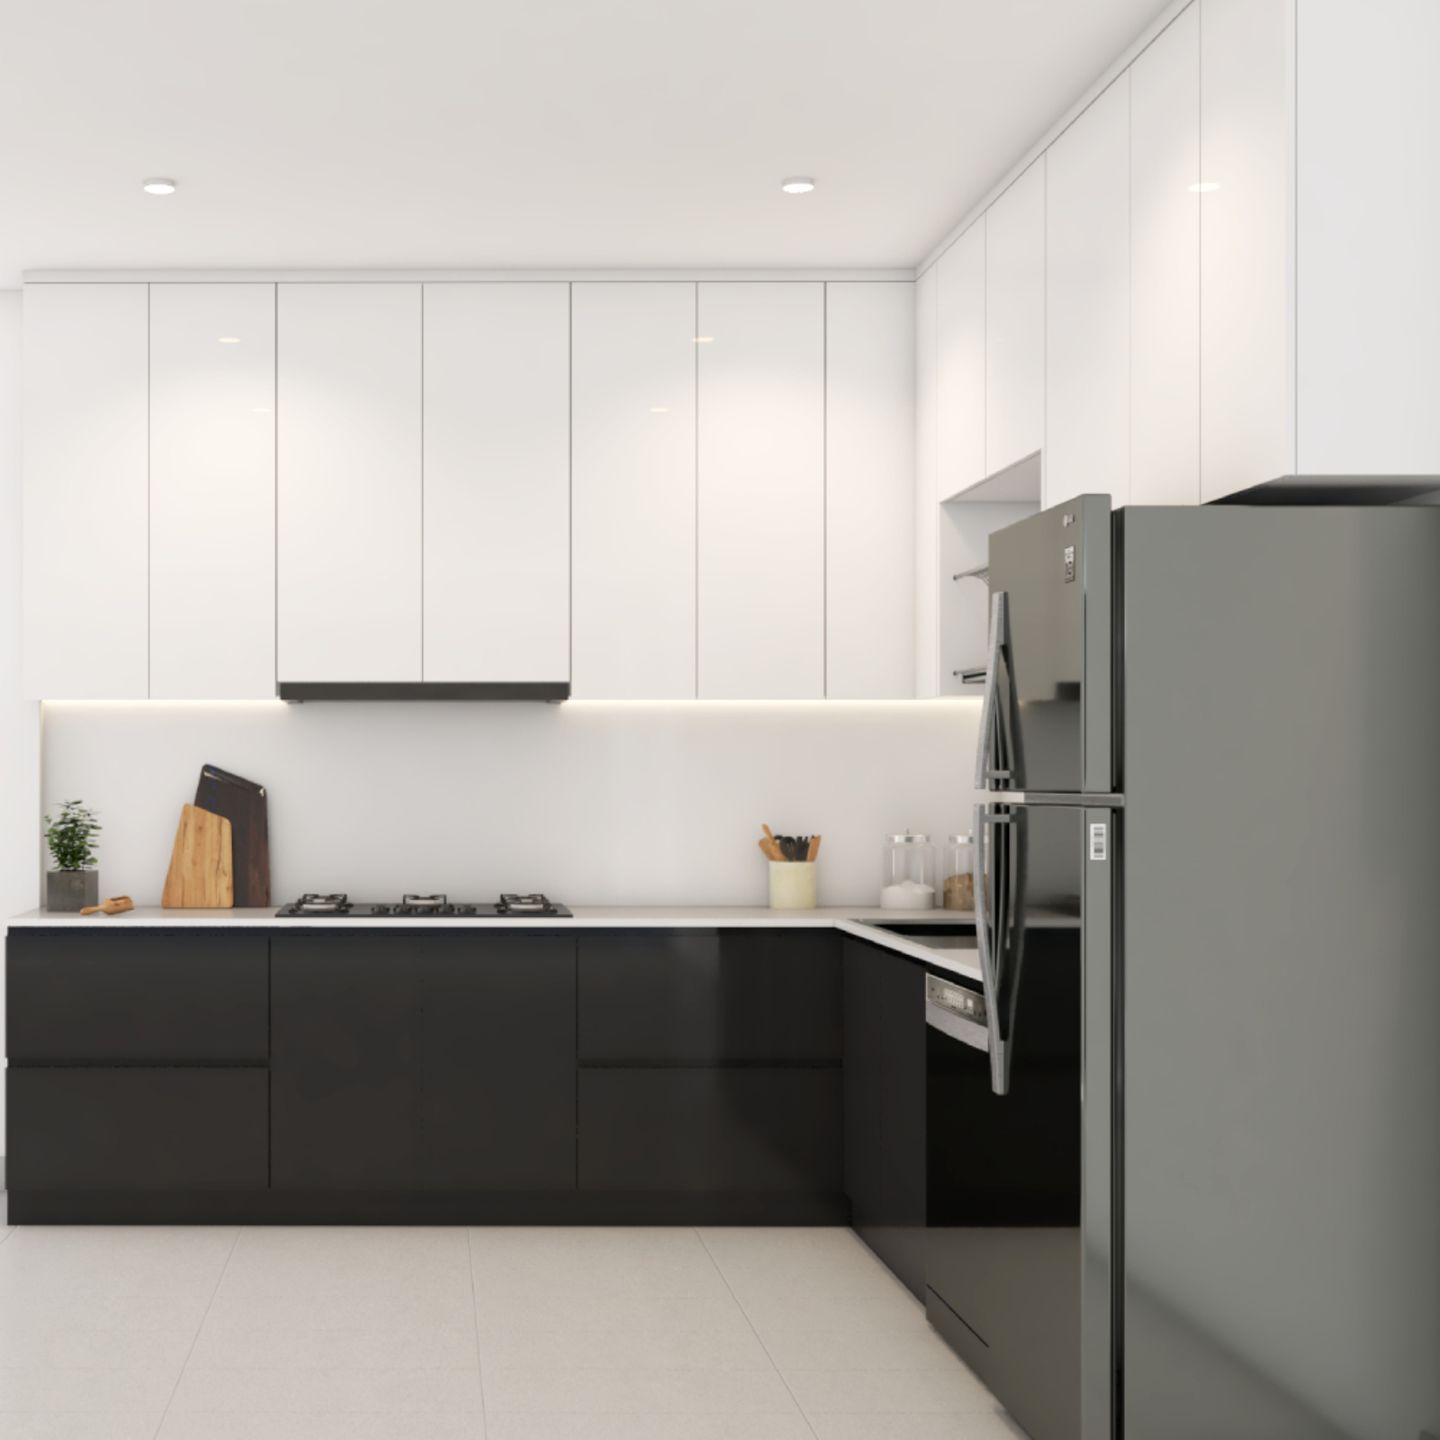 Minimalist Kitchen Design With Profiled Cove Lights And A White Backsplash - Livspace